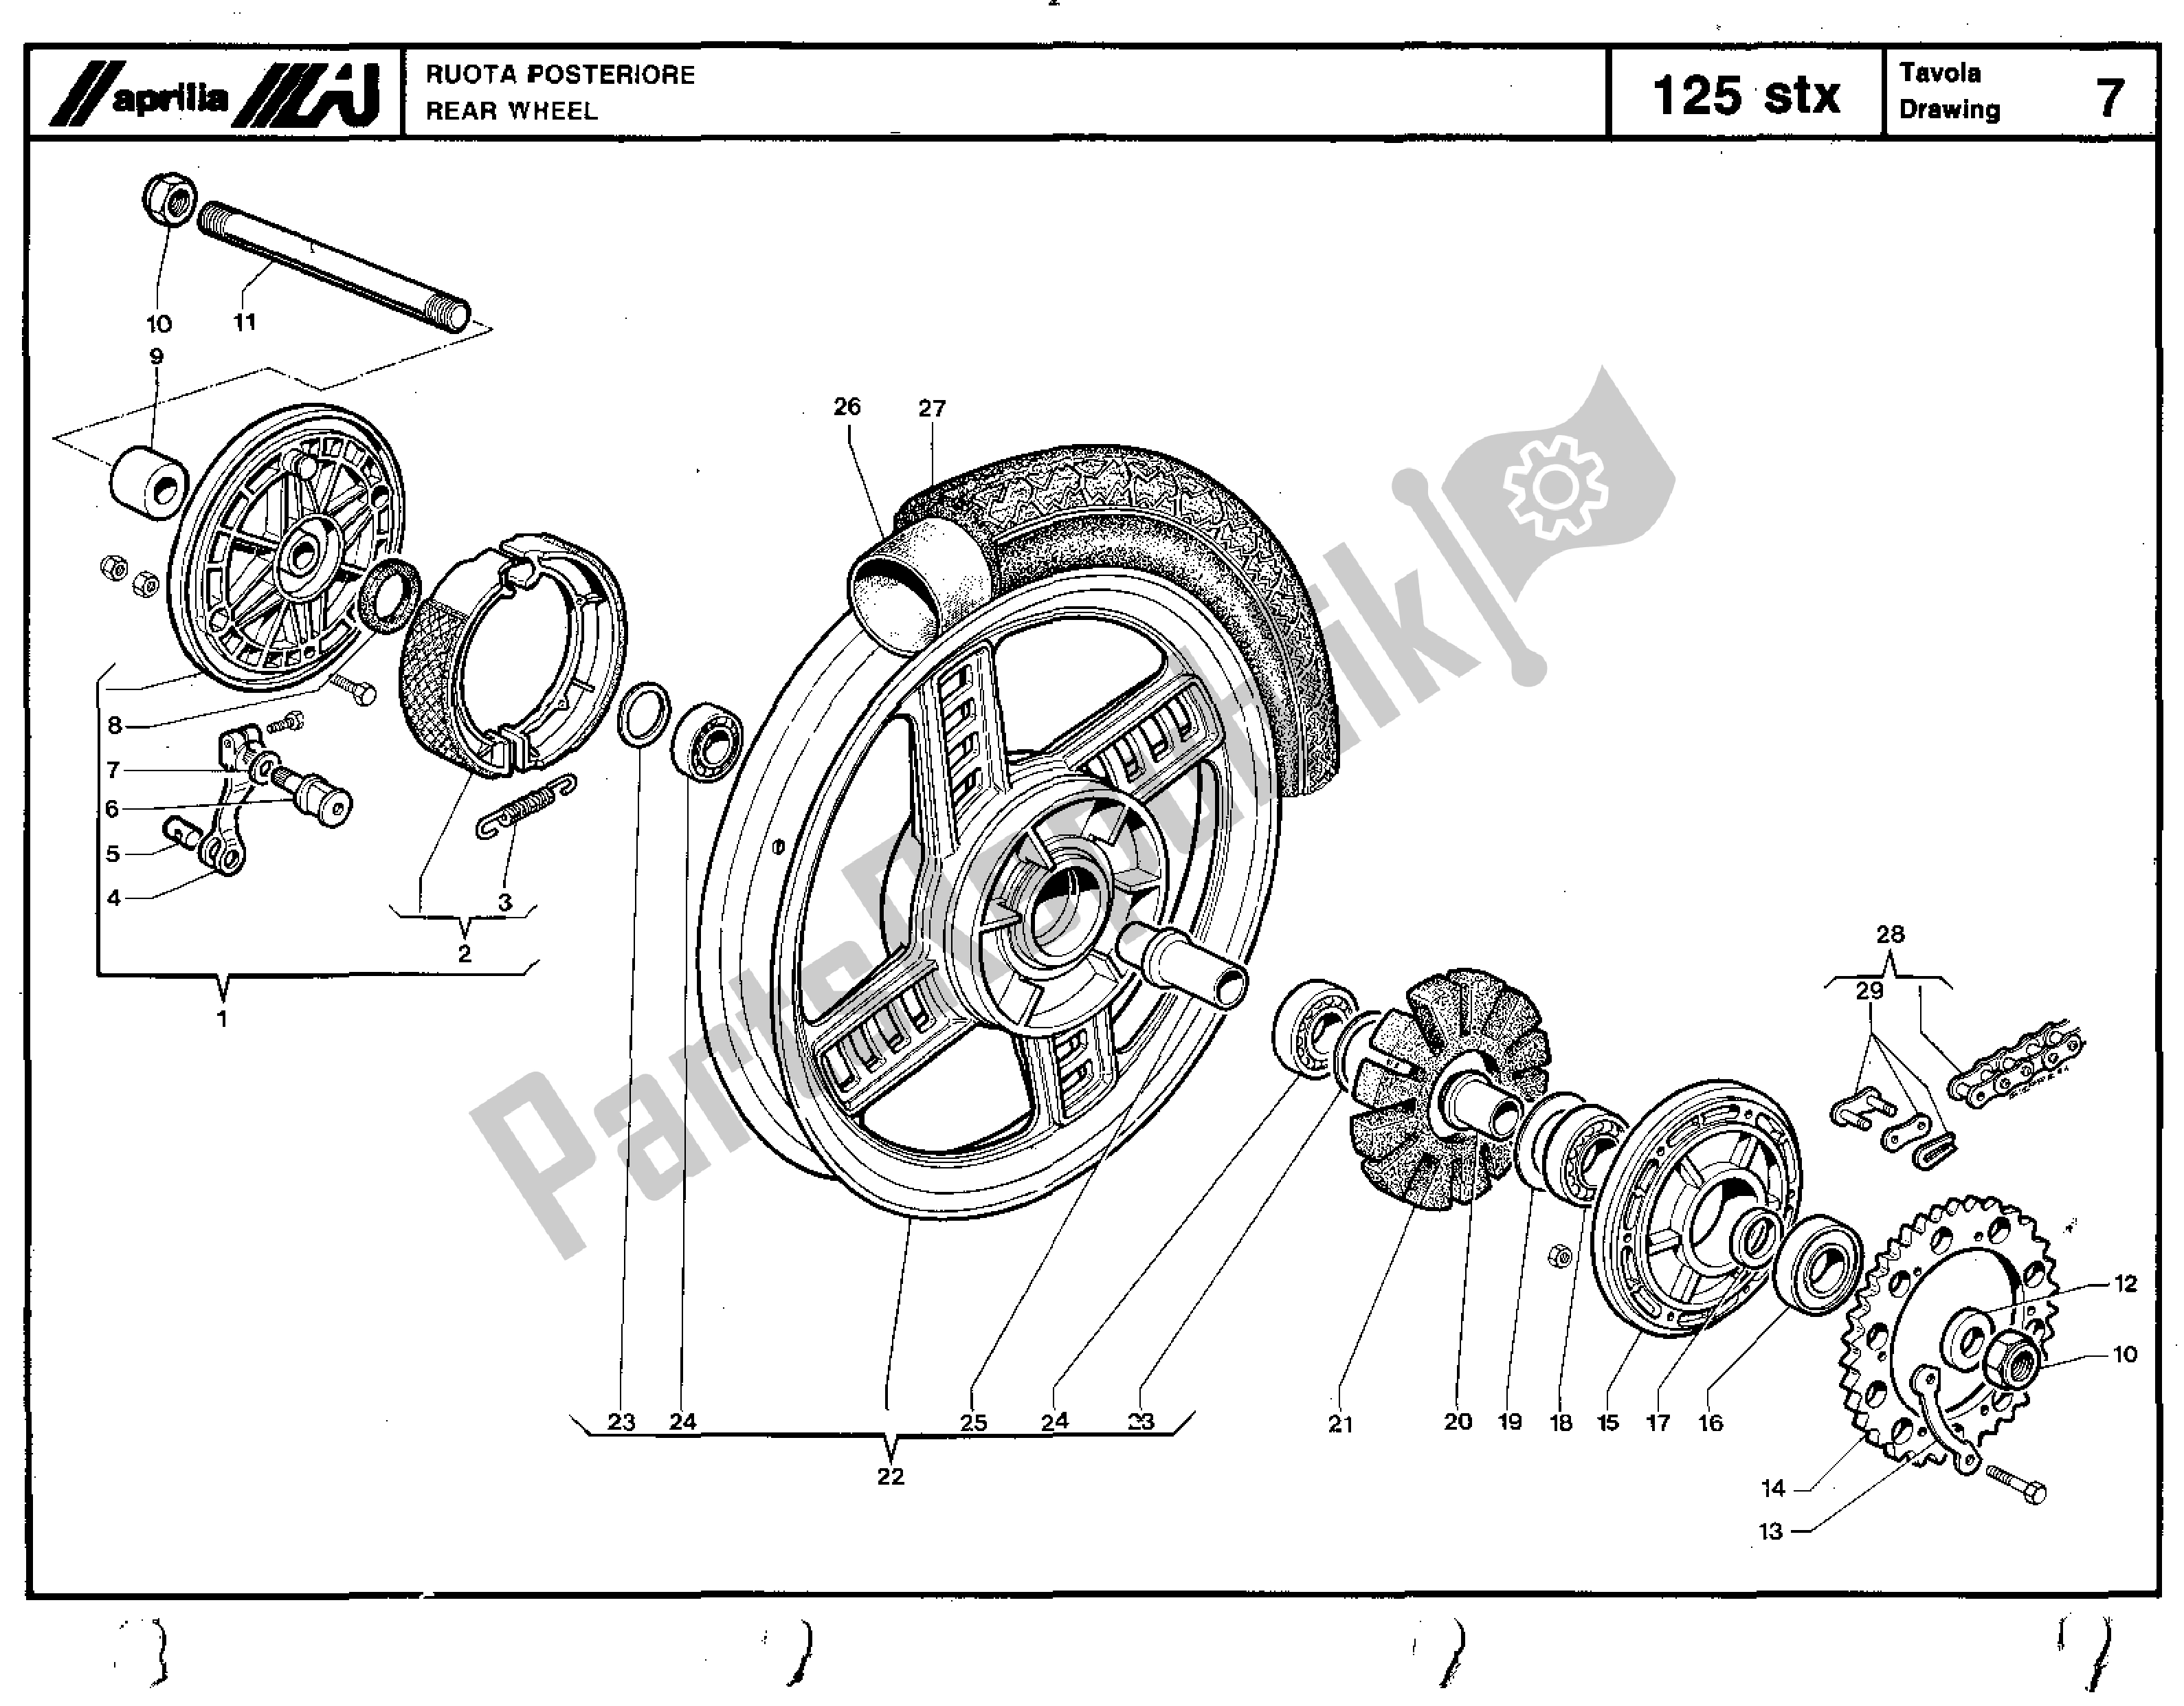 All parts for the Rear Wheel of the Aprilia STX 125 1984 - 1986